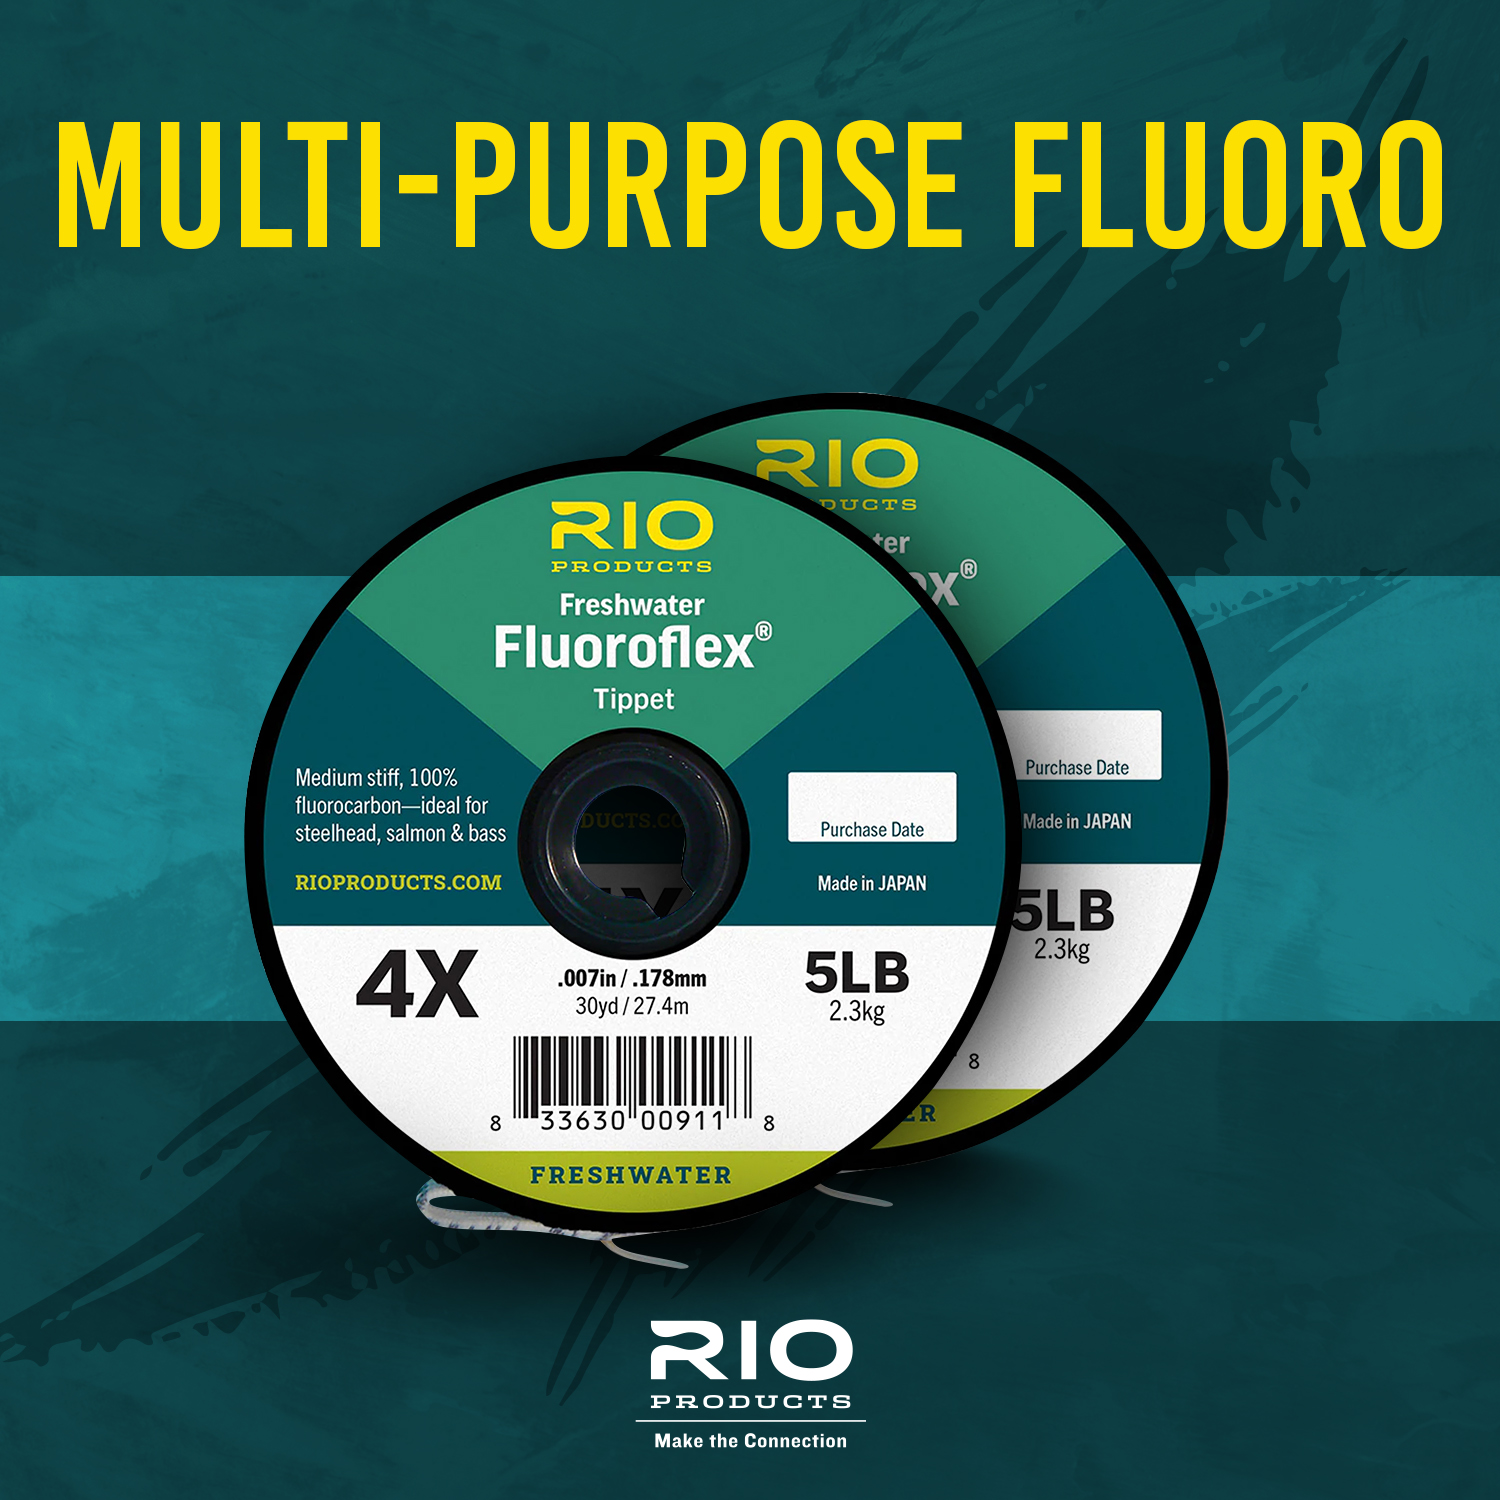 RIO Fluoroflex Tippet – Guide Flyfishing, Fly Fishing Rods, Reels, Sage, Redington, RIO